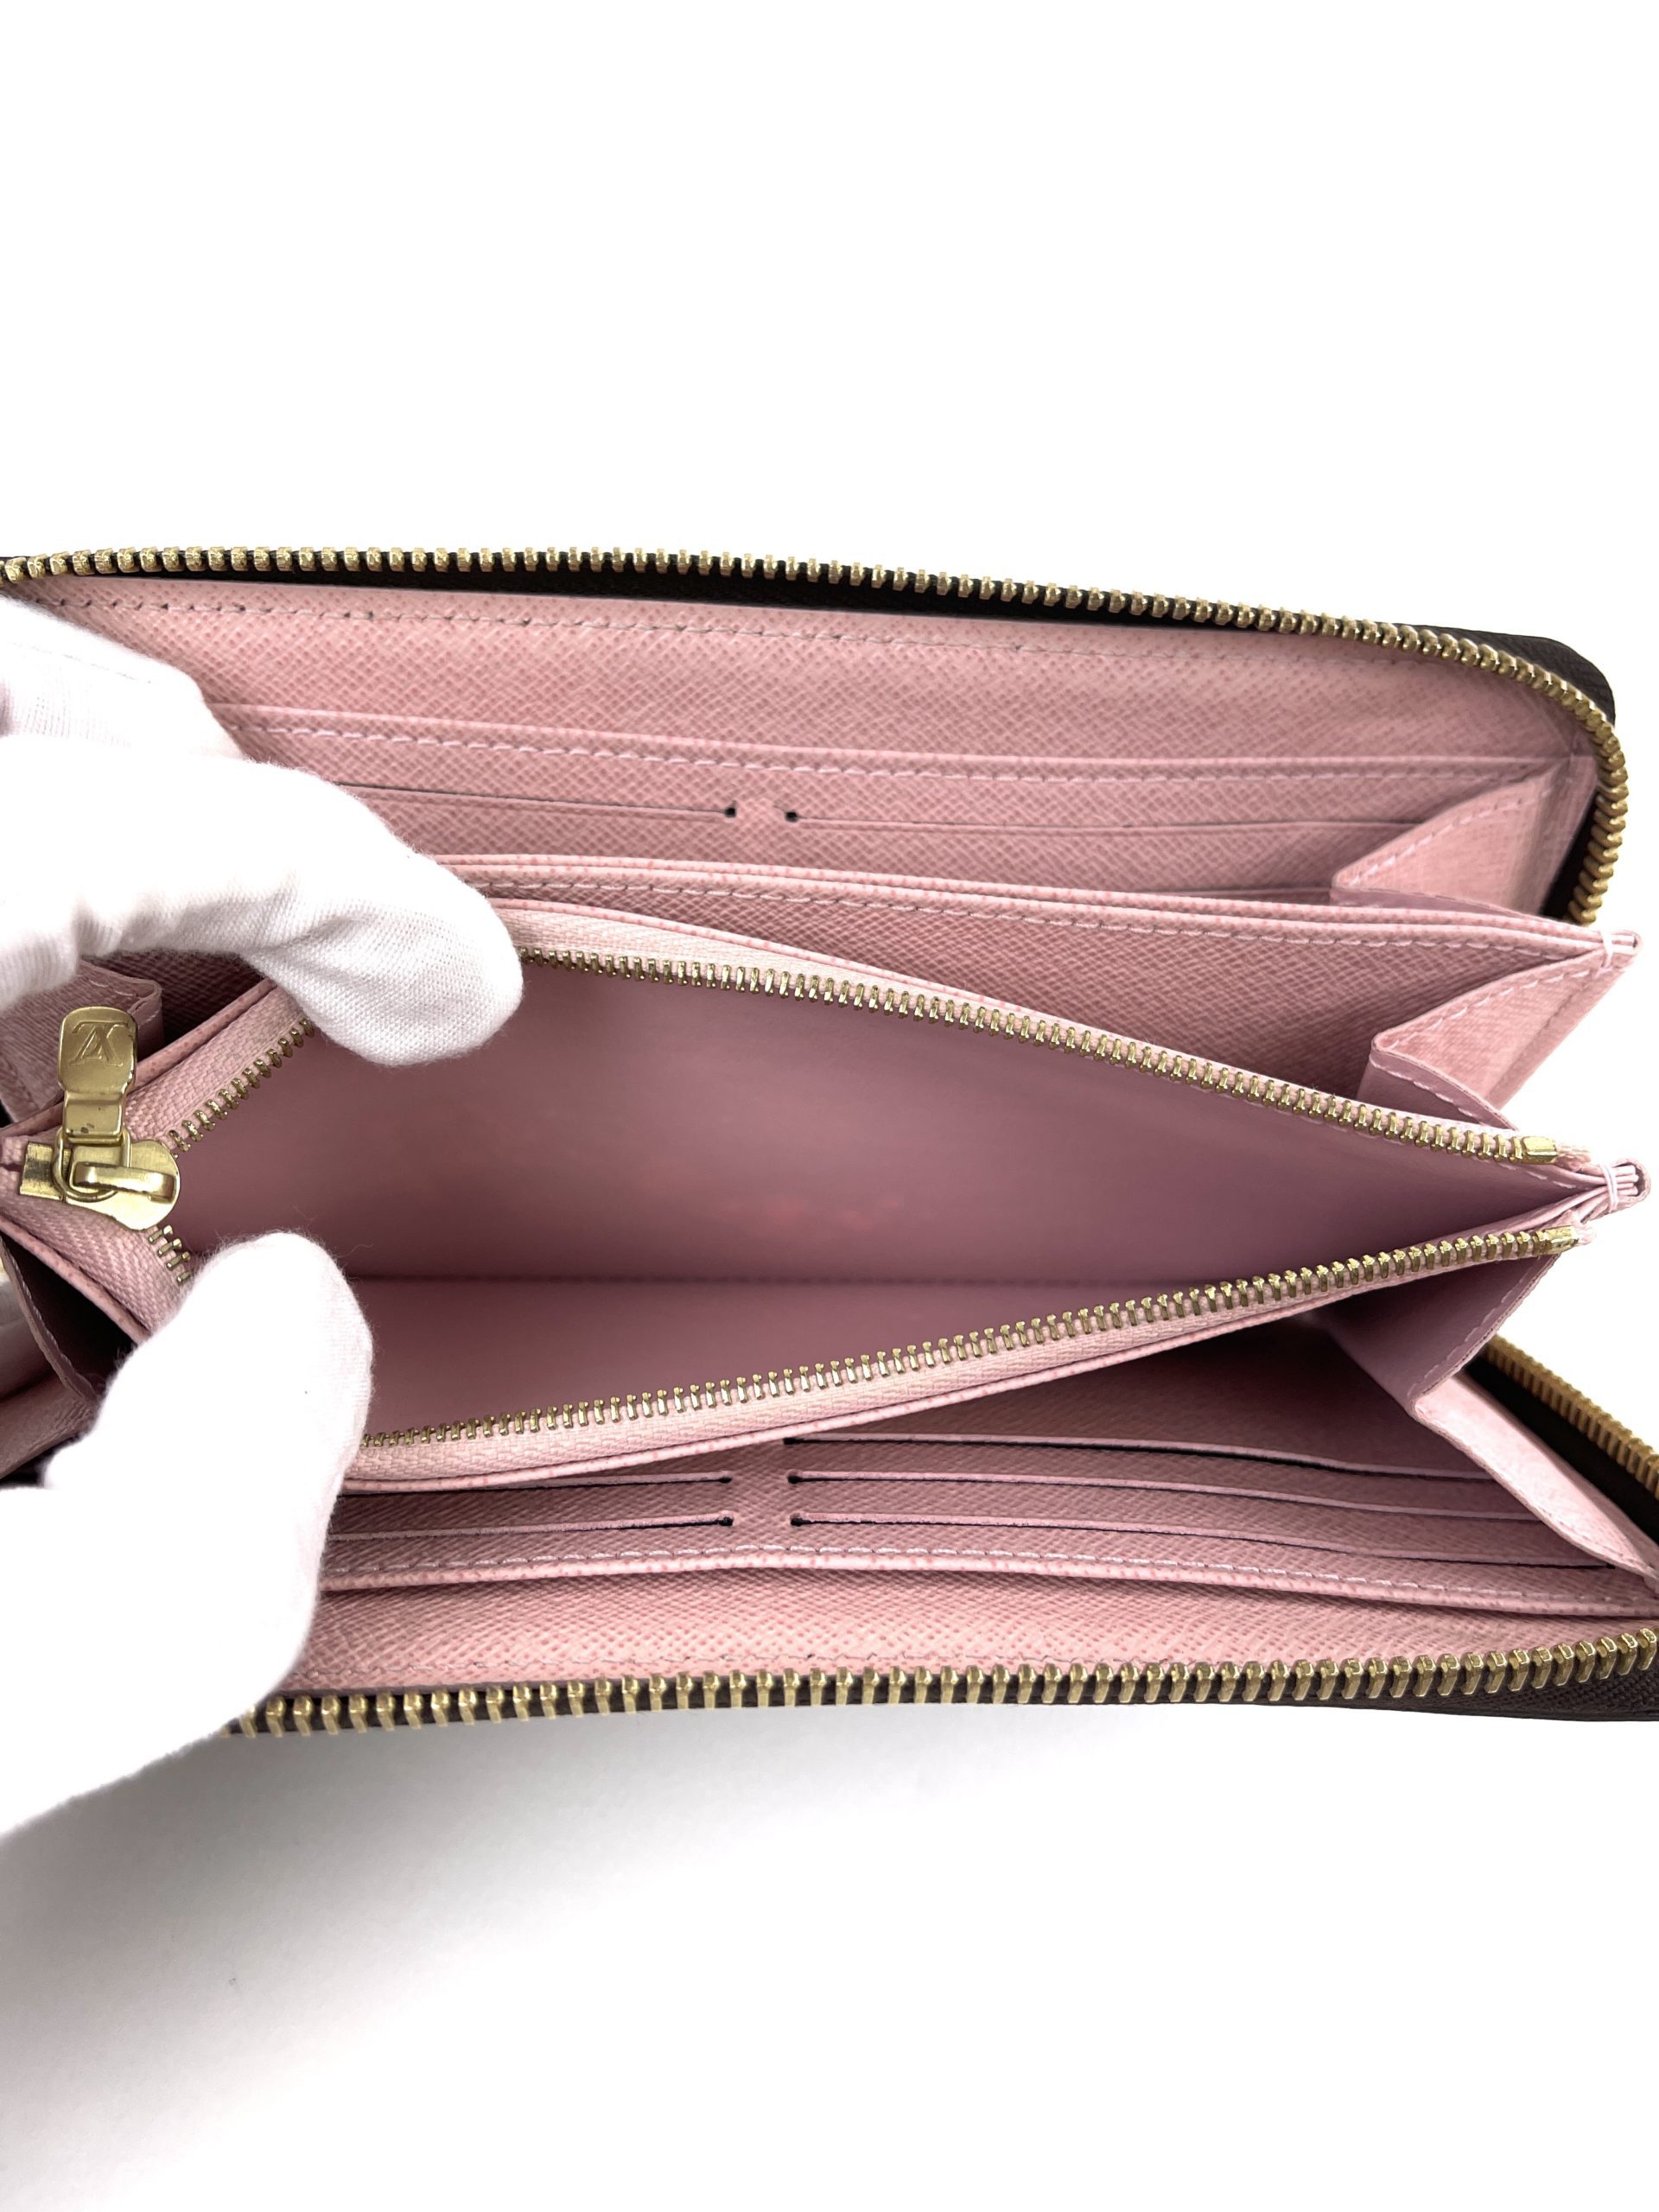 Louis Vuitton - Zippy Wallet - Rose Ballerine - Women - Luxury